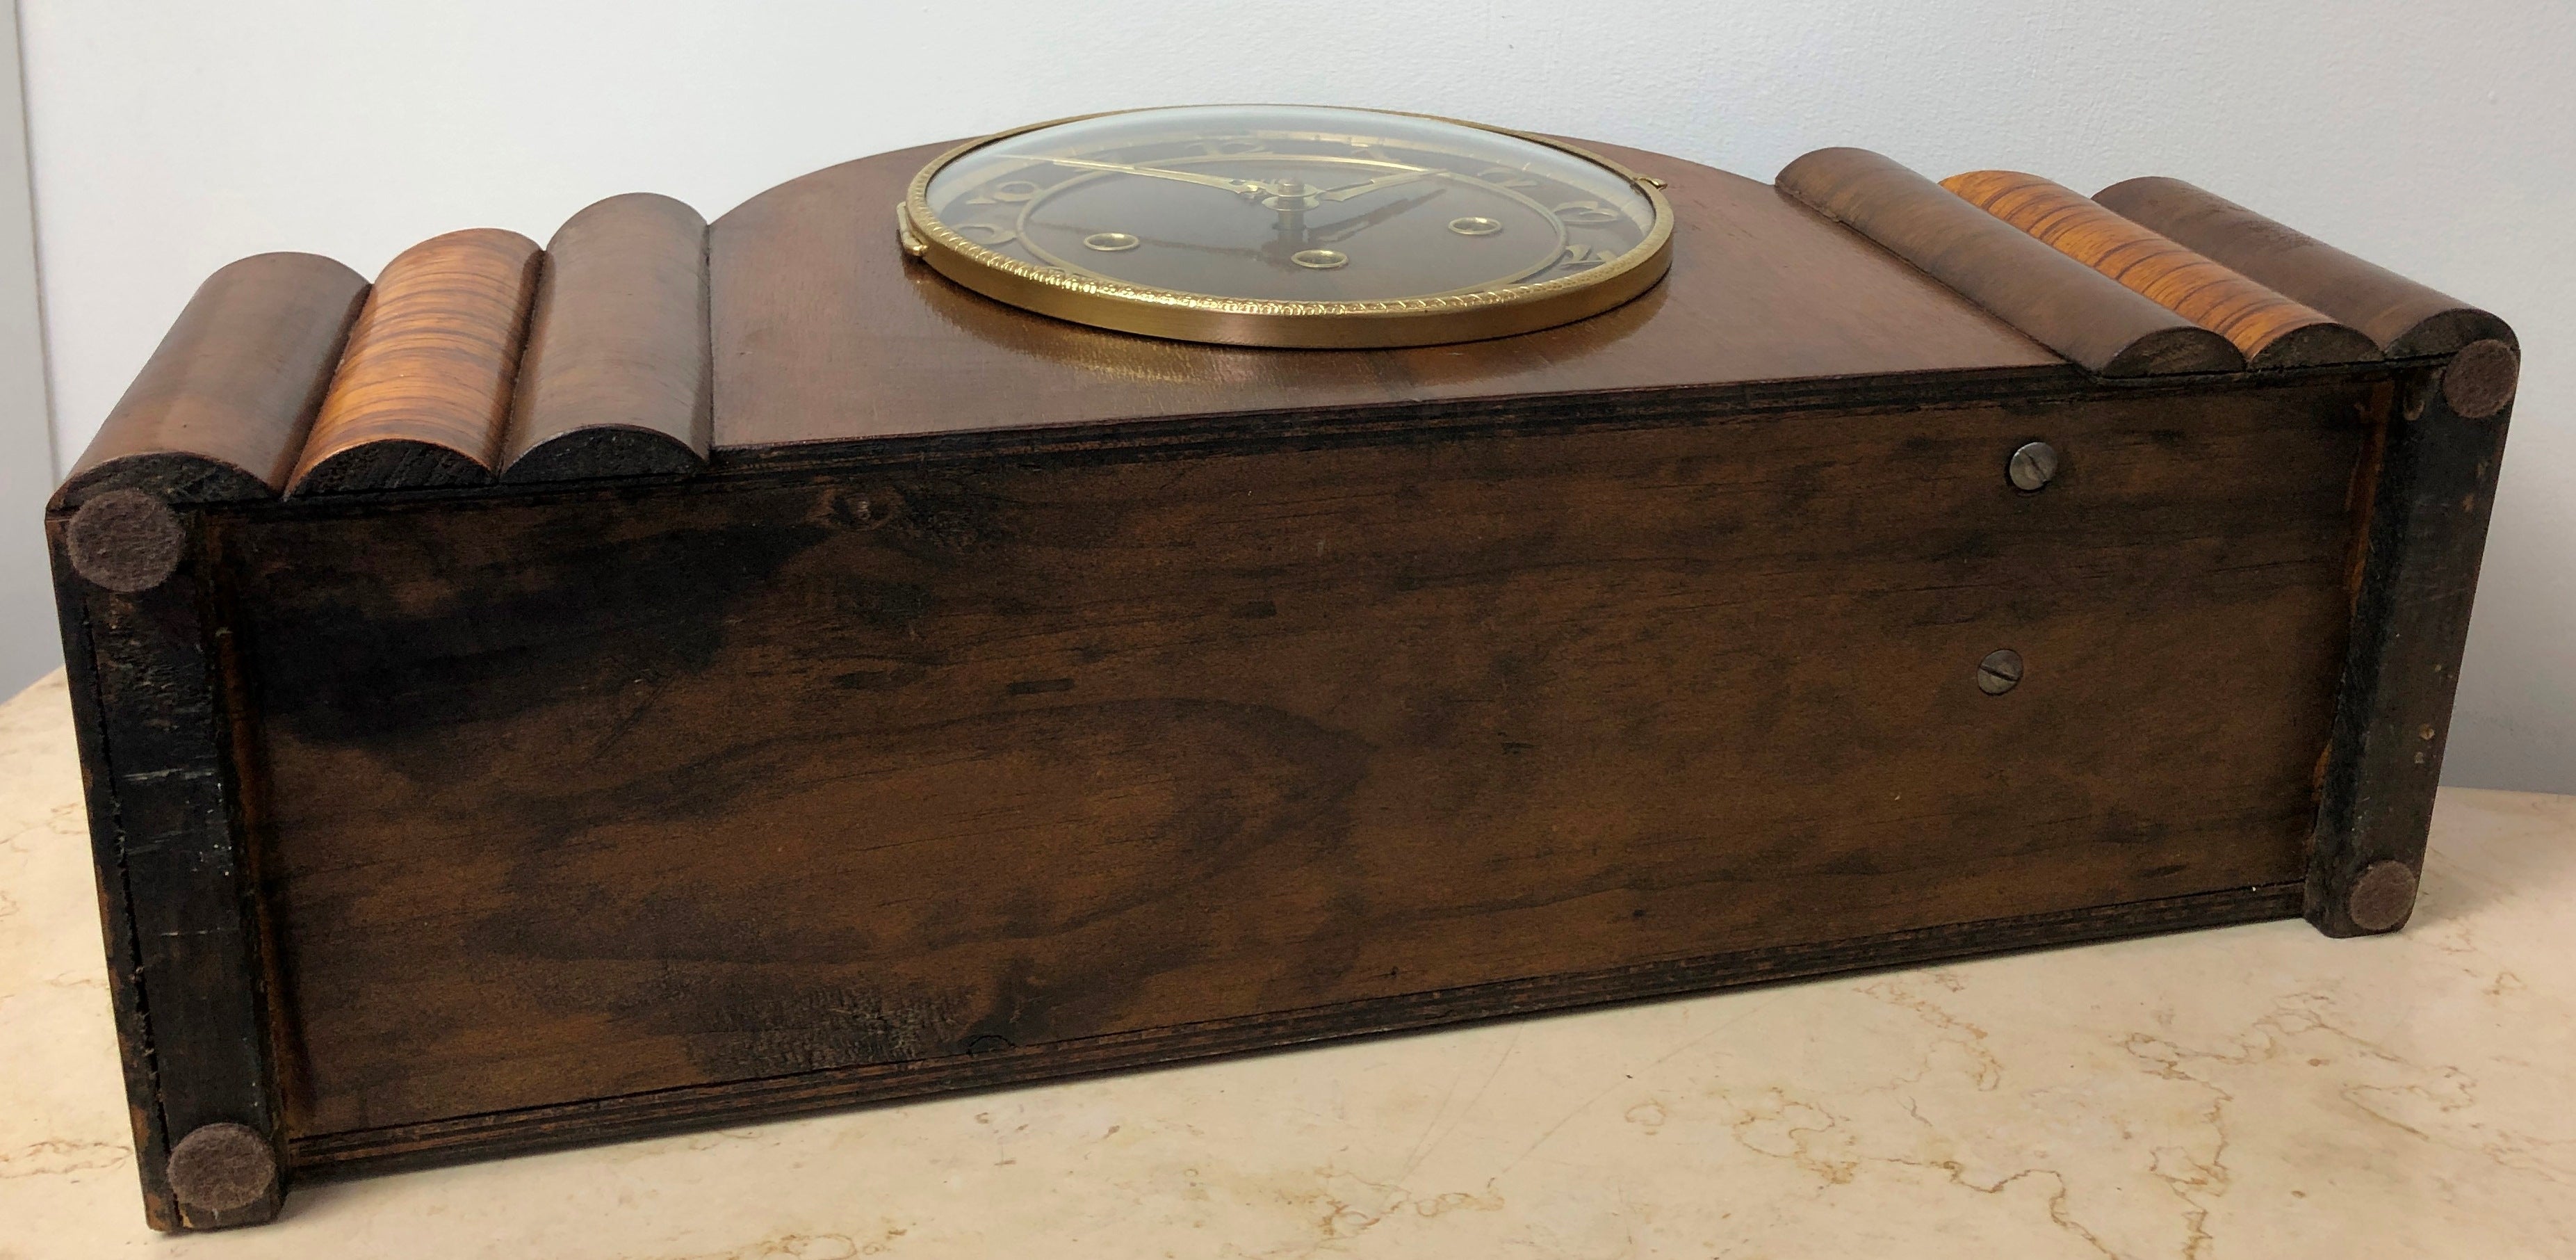 Vintage EJU WESTMINSTER Mantel Clock | eXibit collection